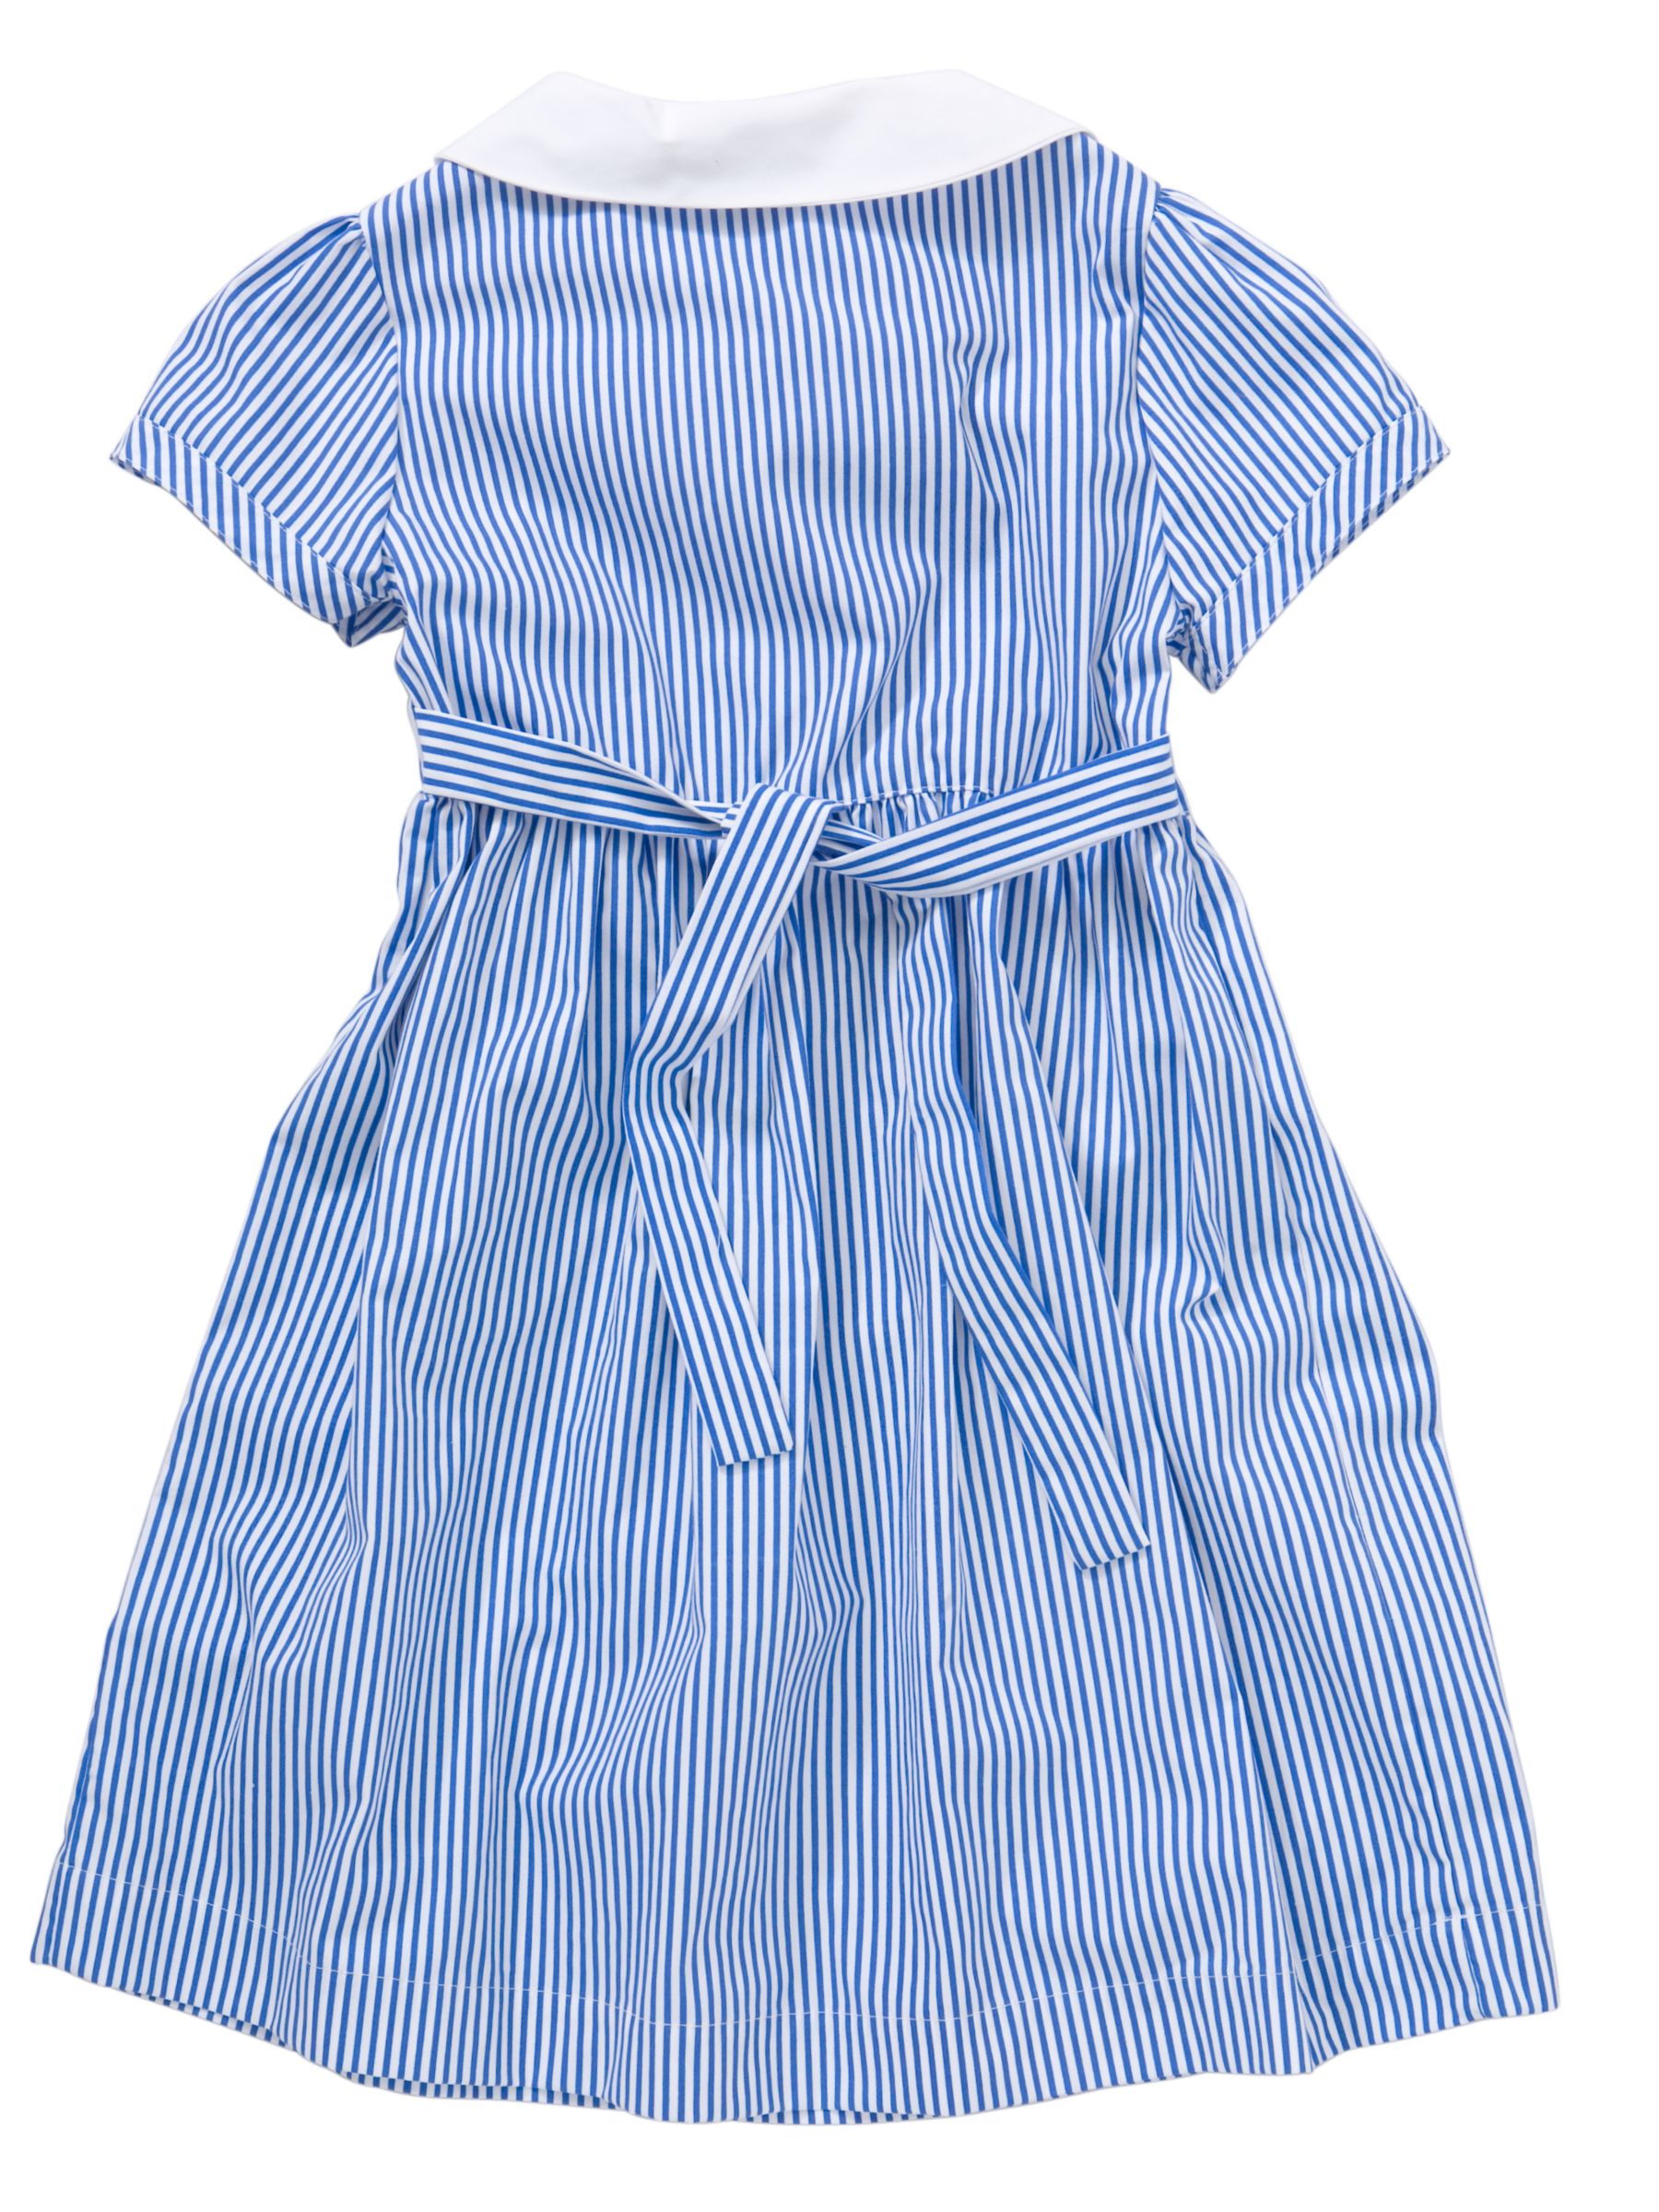 John Lewis School Striped Summer Dress, Blue at John Lewis & Partners